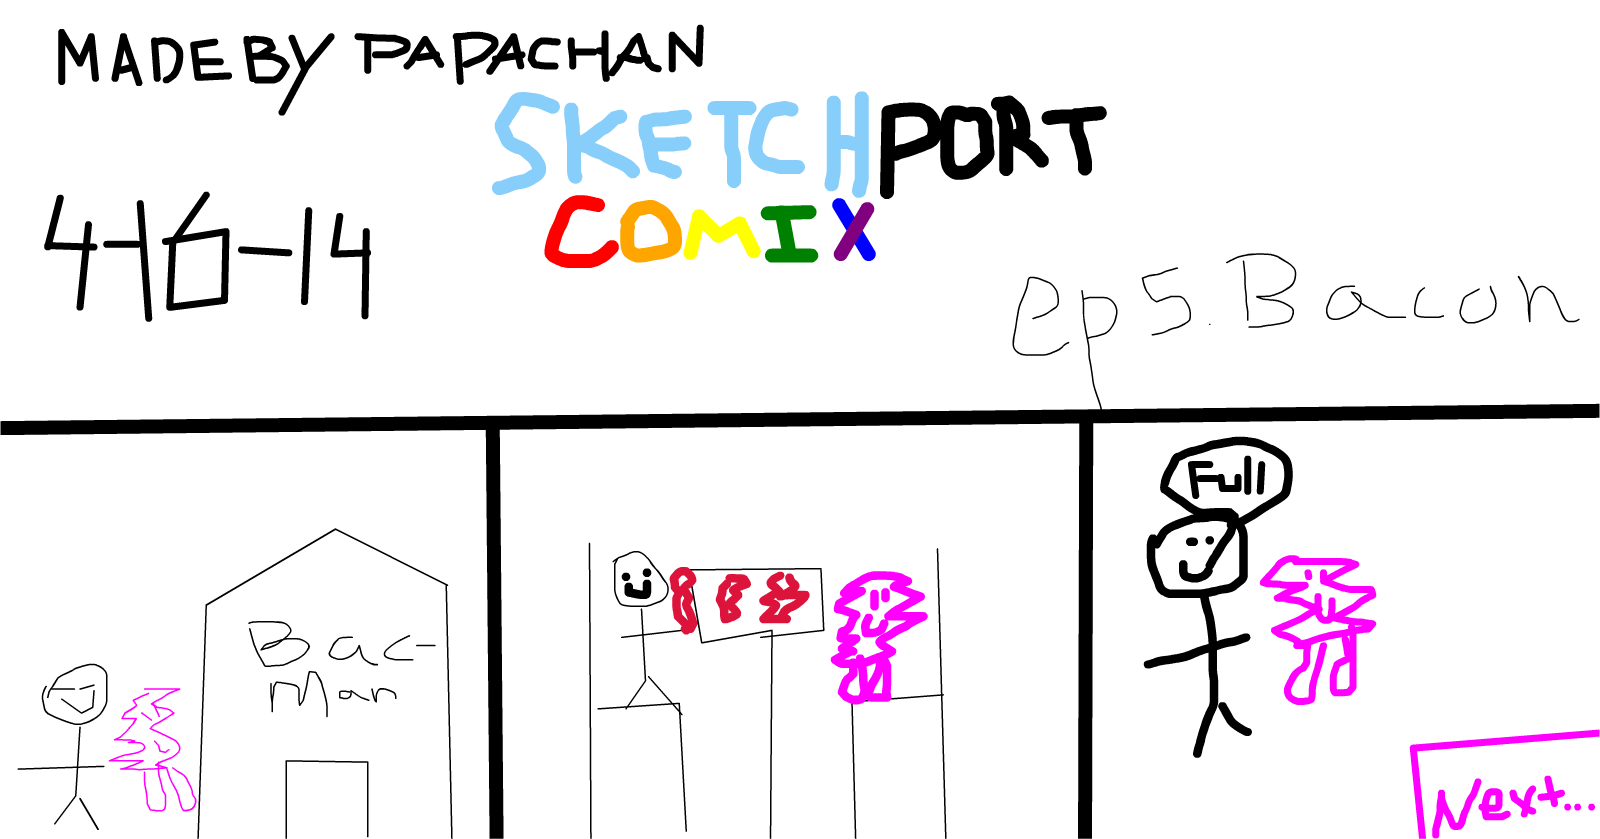 Sketchport Comix: Episode 5 Bacon